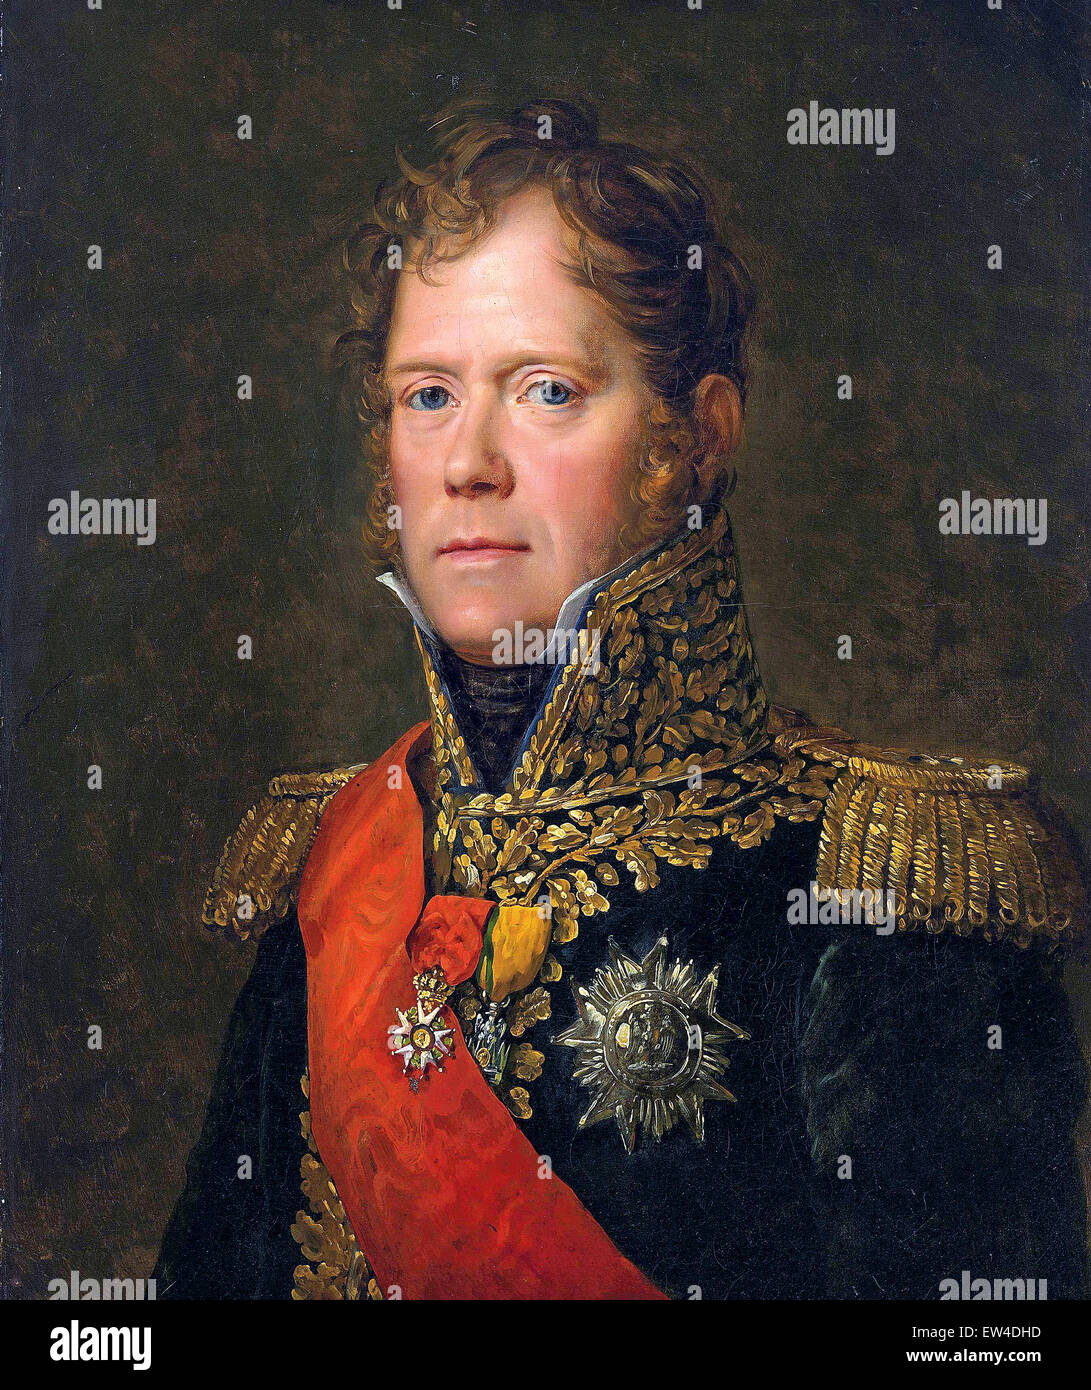 Michel Ney, Marshall del imperio francés, duque de Elchingen, príncipe de Moscú Foto de stock